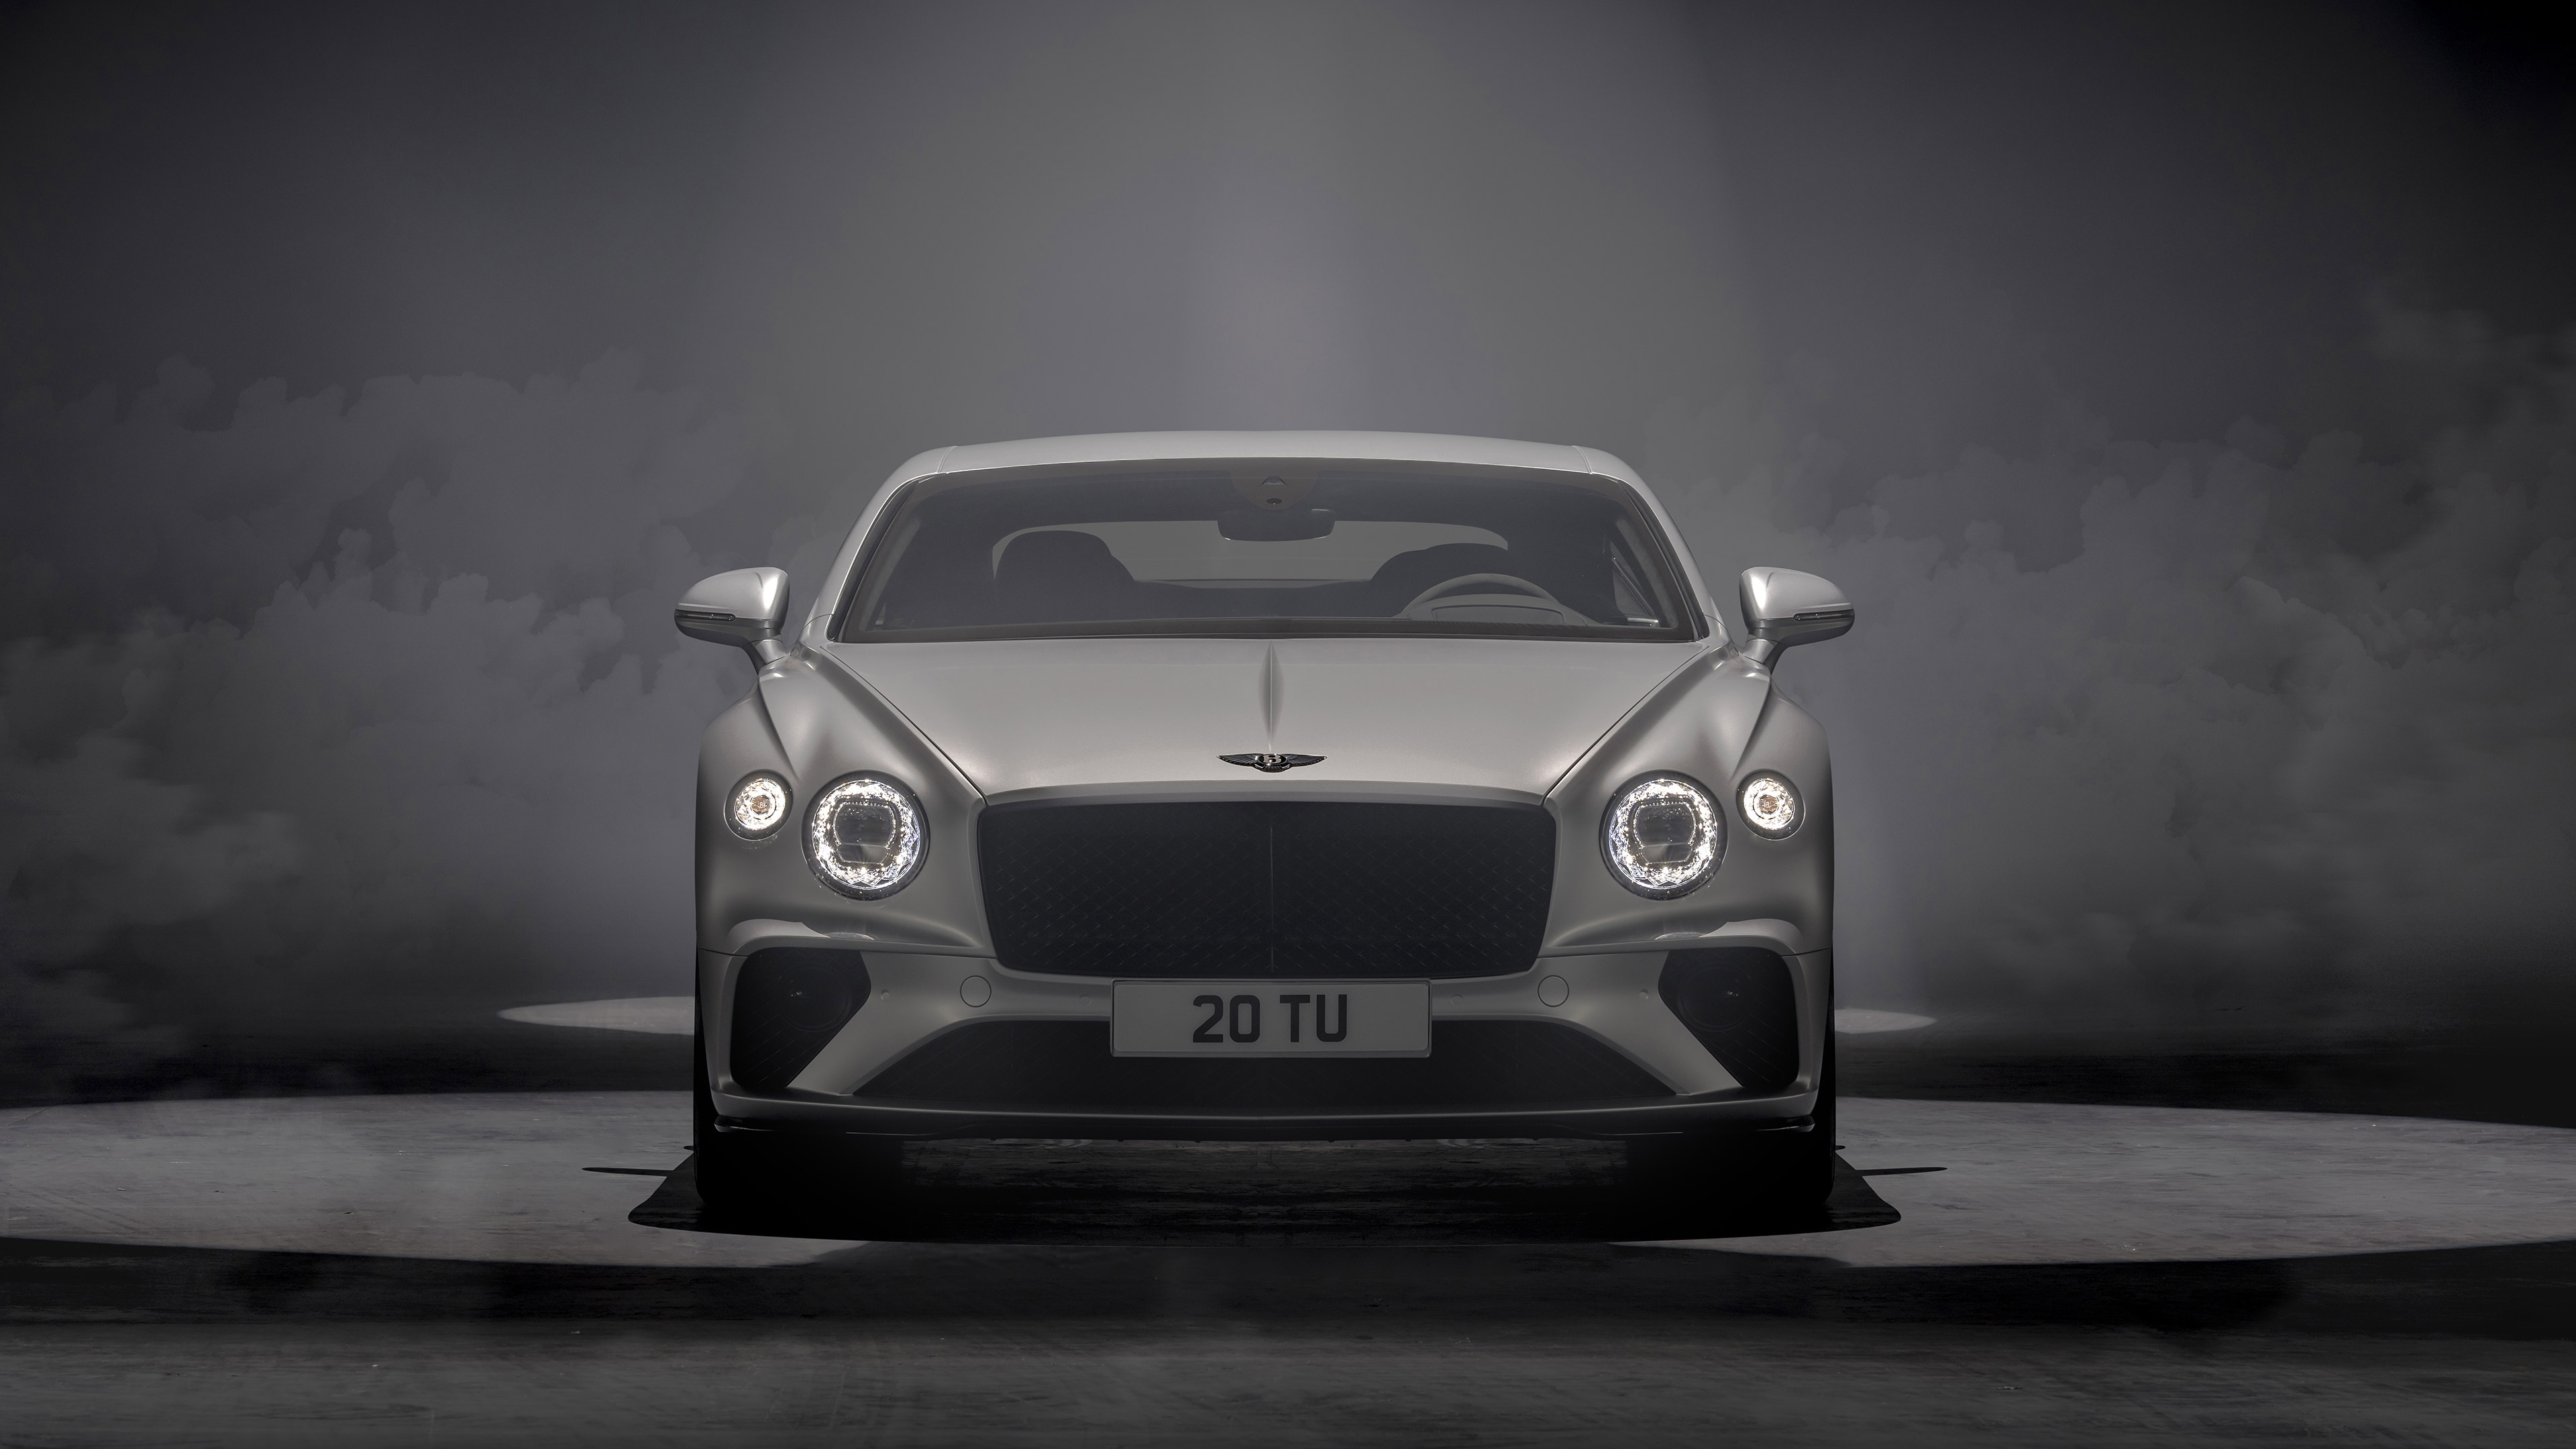 Baixe gratuitamente a imagem Bentley, Carro, Veículos, Carro Prateado, Bentley Continental, Velocidade Bentley Continental Gt na área de trabalho do seu PC